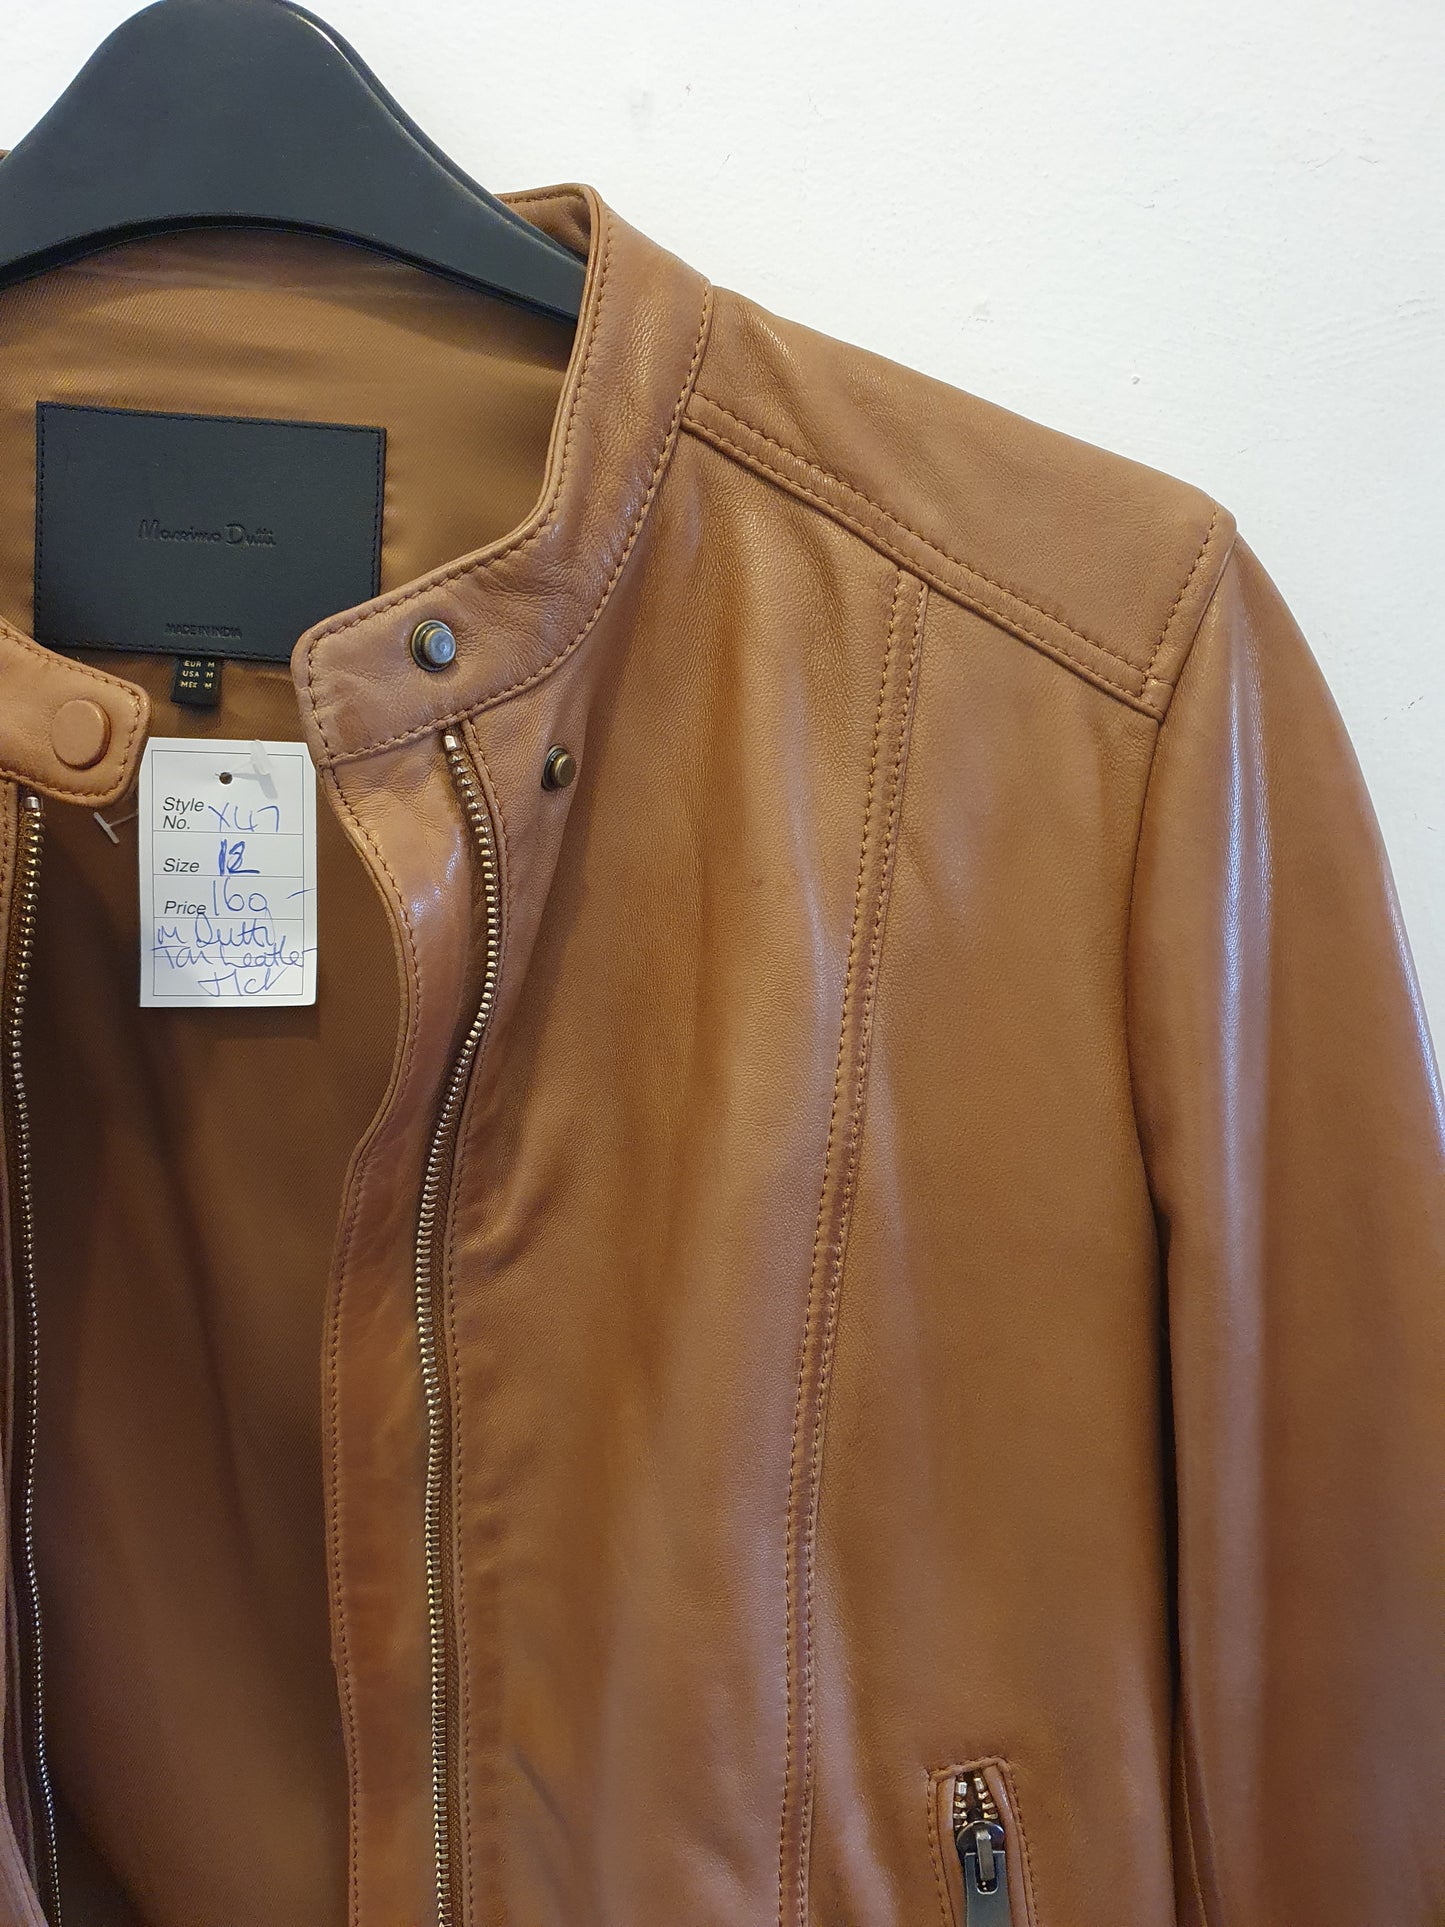 Massimo Dutti, Tan Leather Jacket, Size M/UK 12